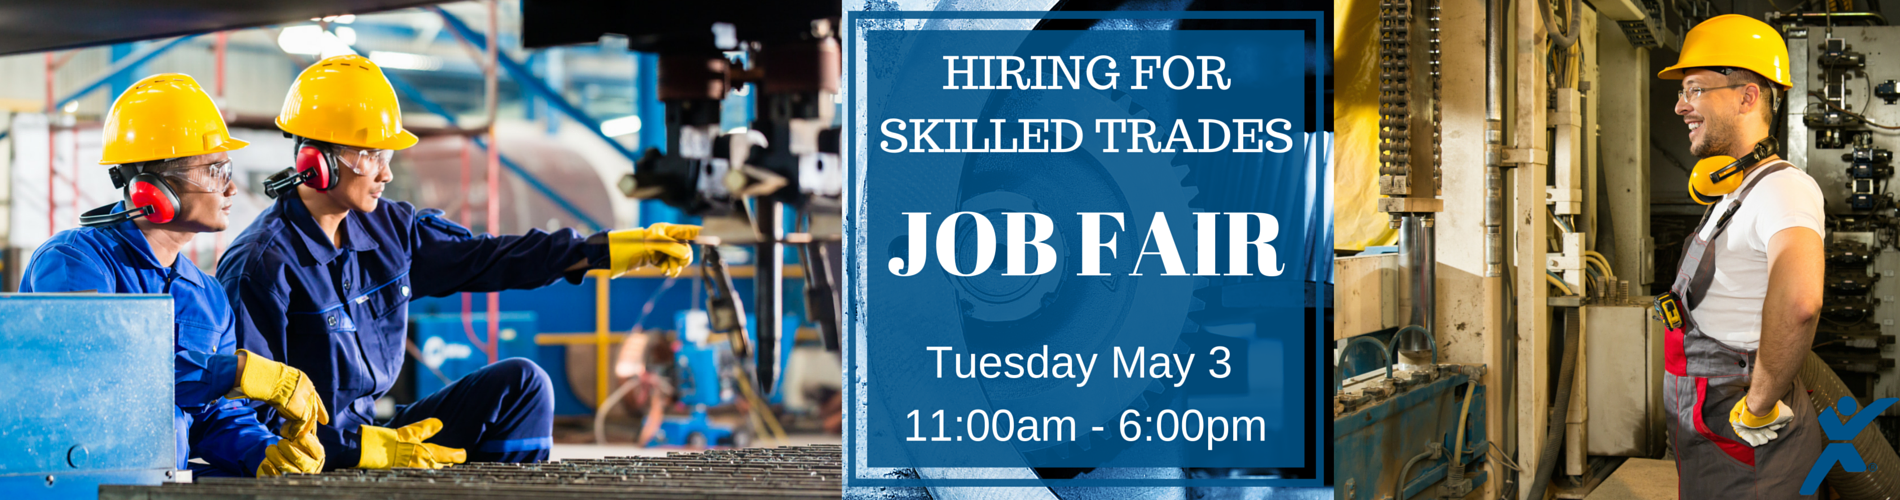 Skilled Trades Job Fair Page banner